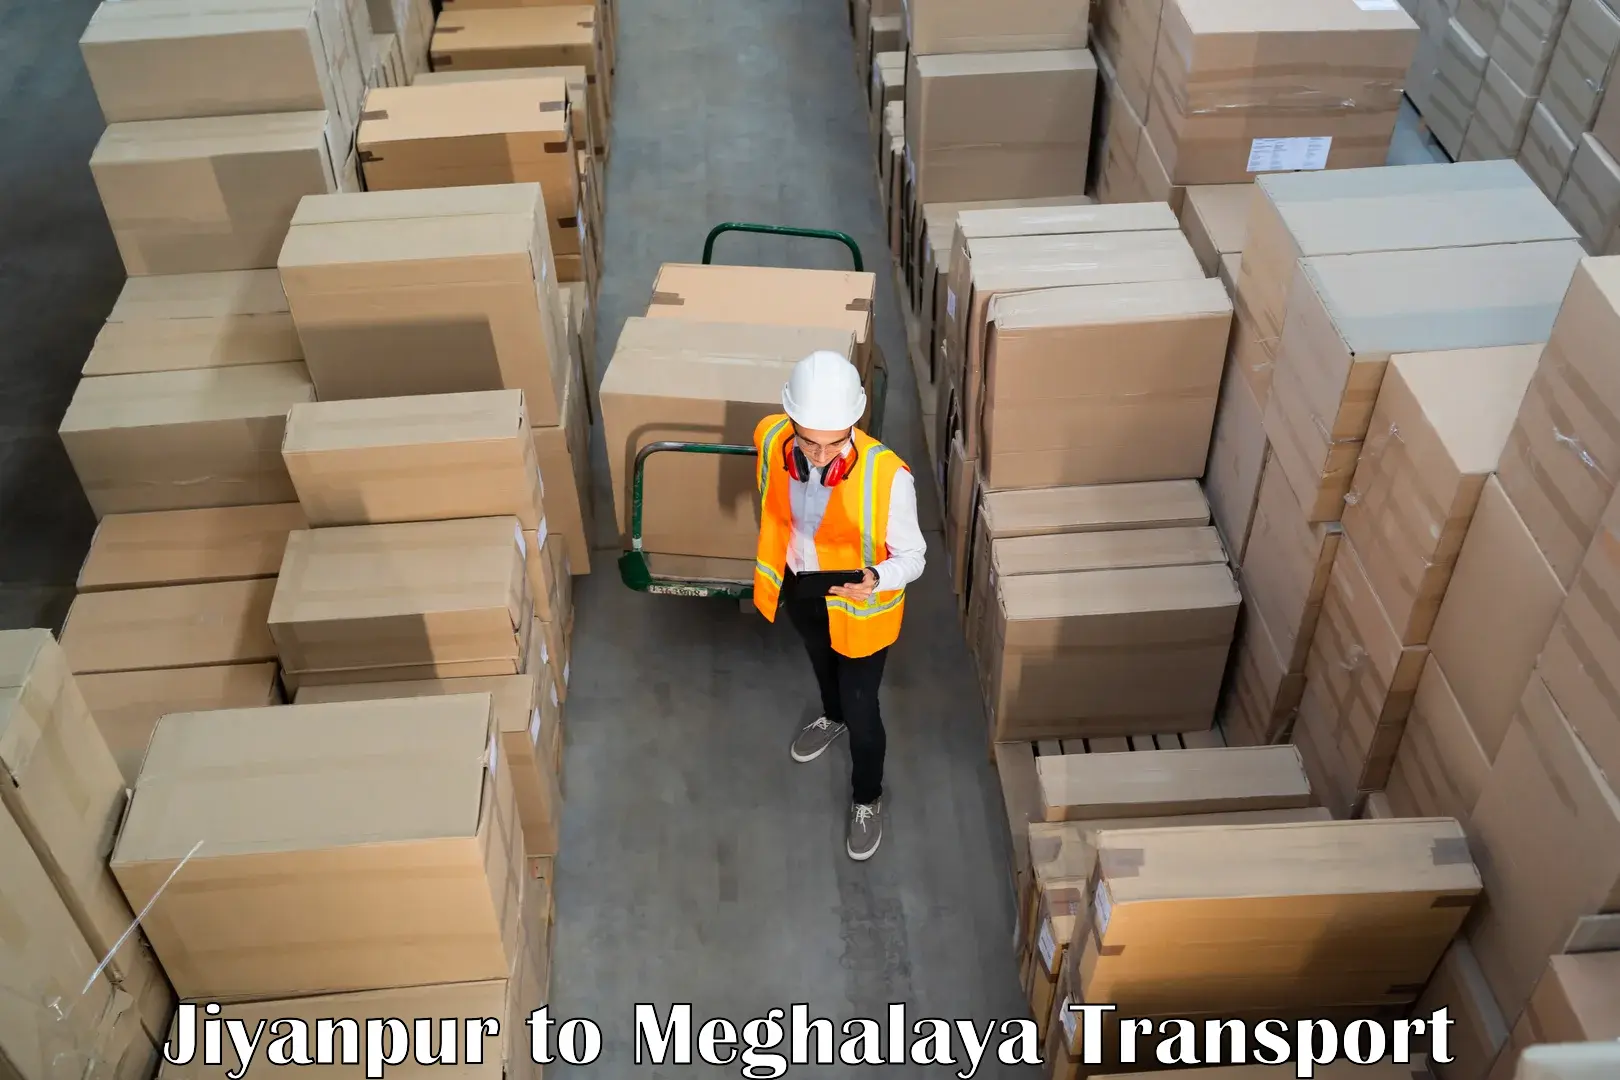 Furniture transport service in Jiyanpur to Jowai